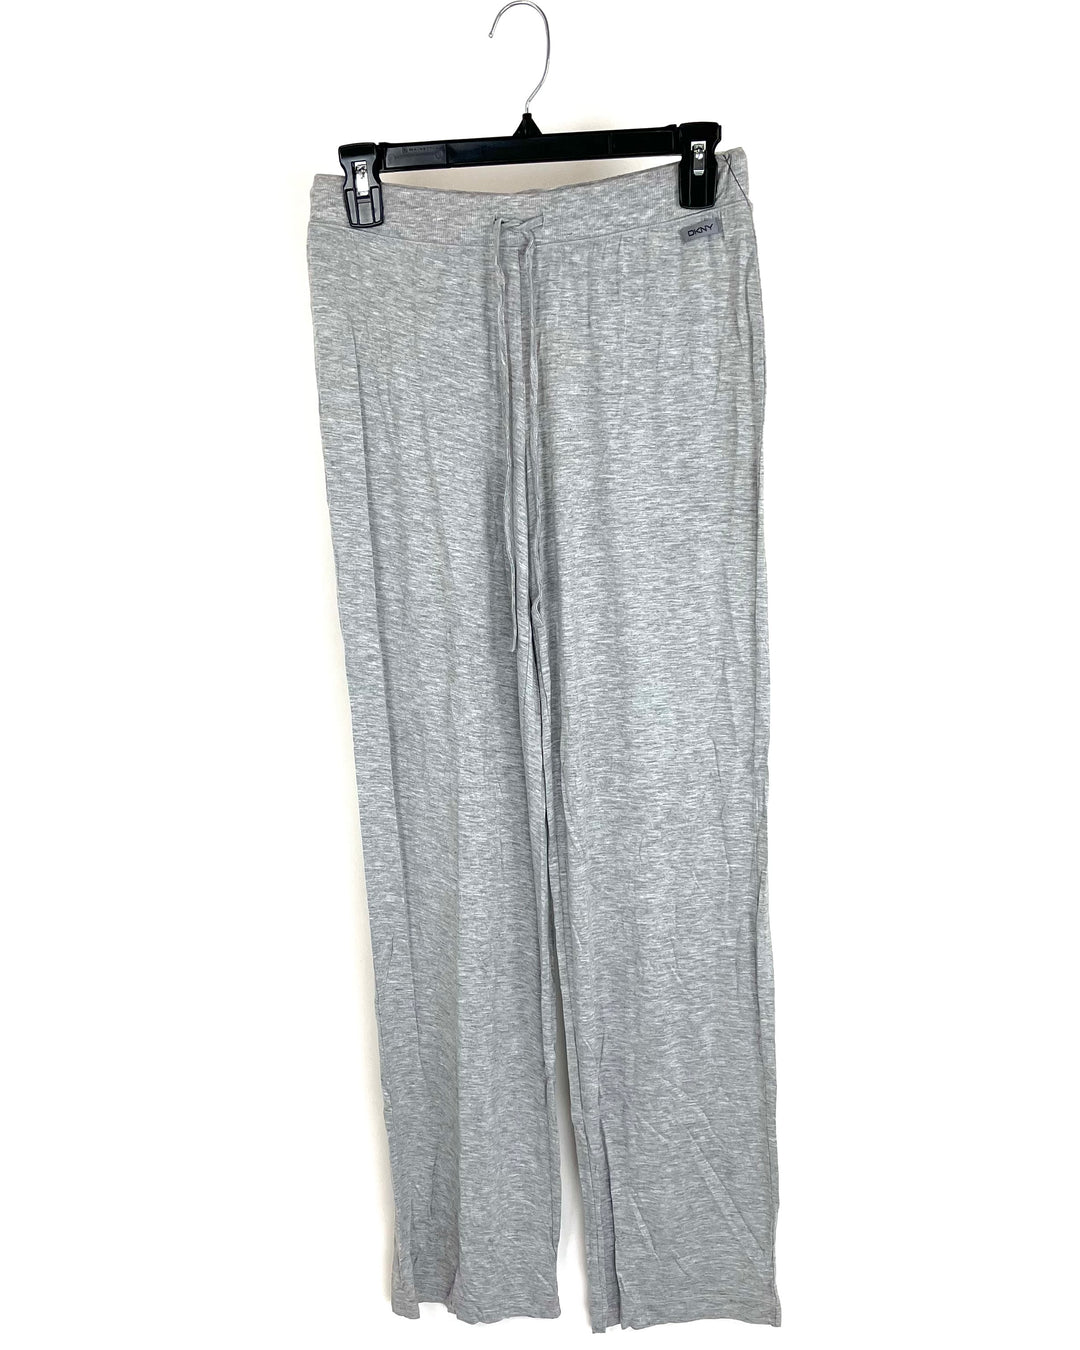 Heathered Grey Lounge Pants - Small